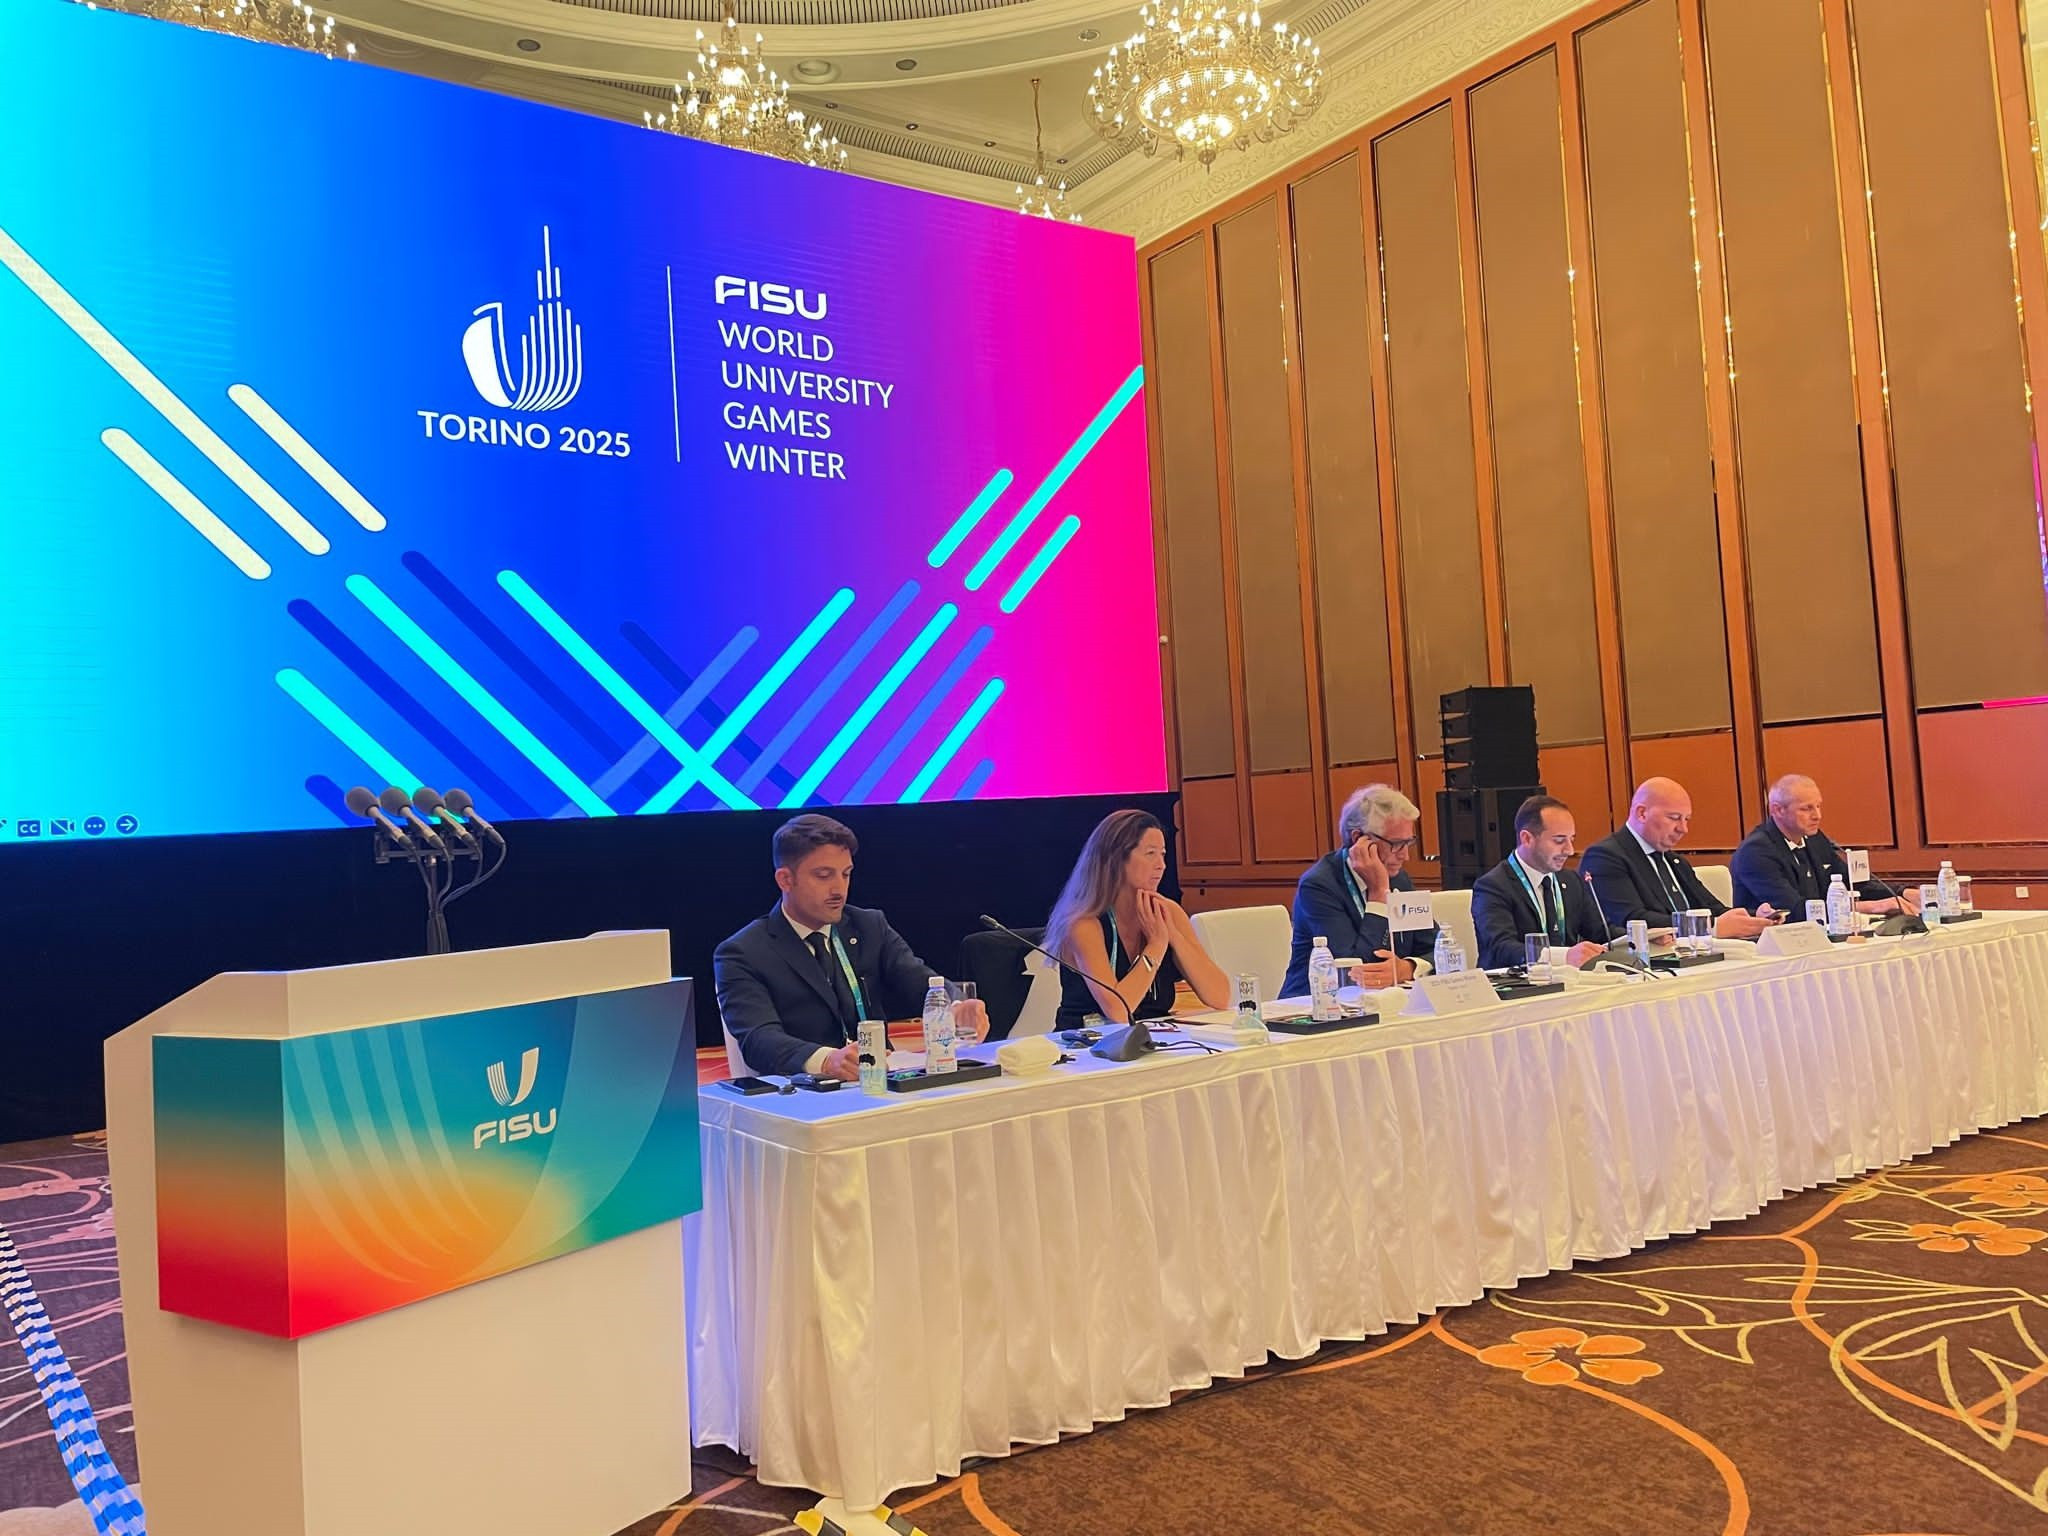 Turin 2025 updates FISU on progress of Winter World University Games in Chengdu